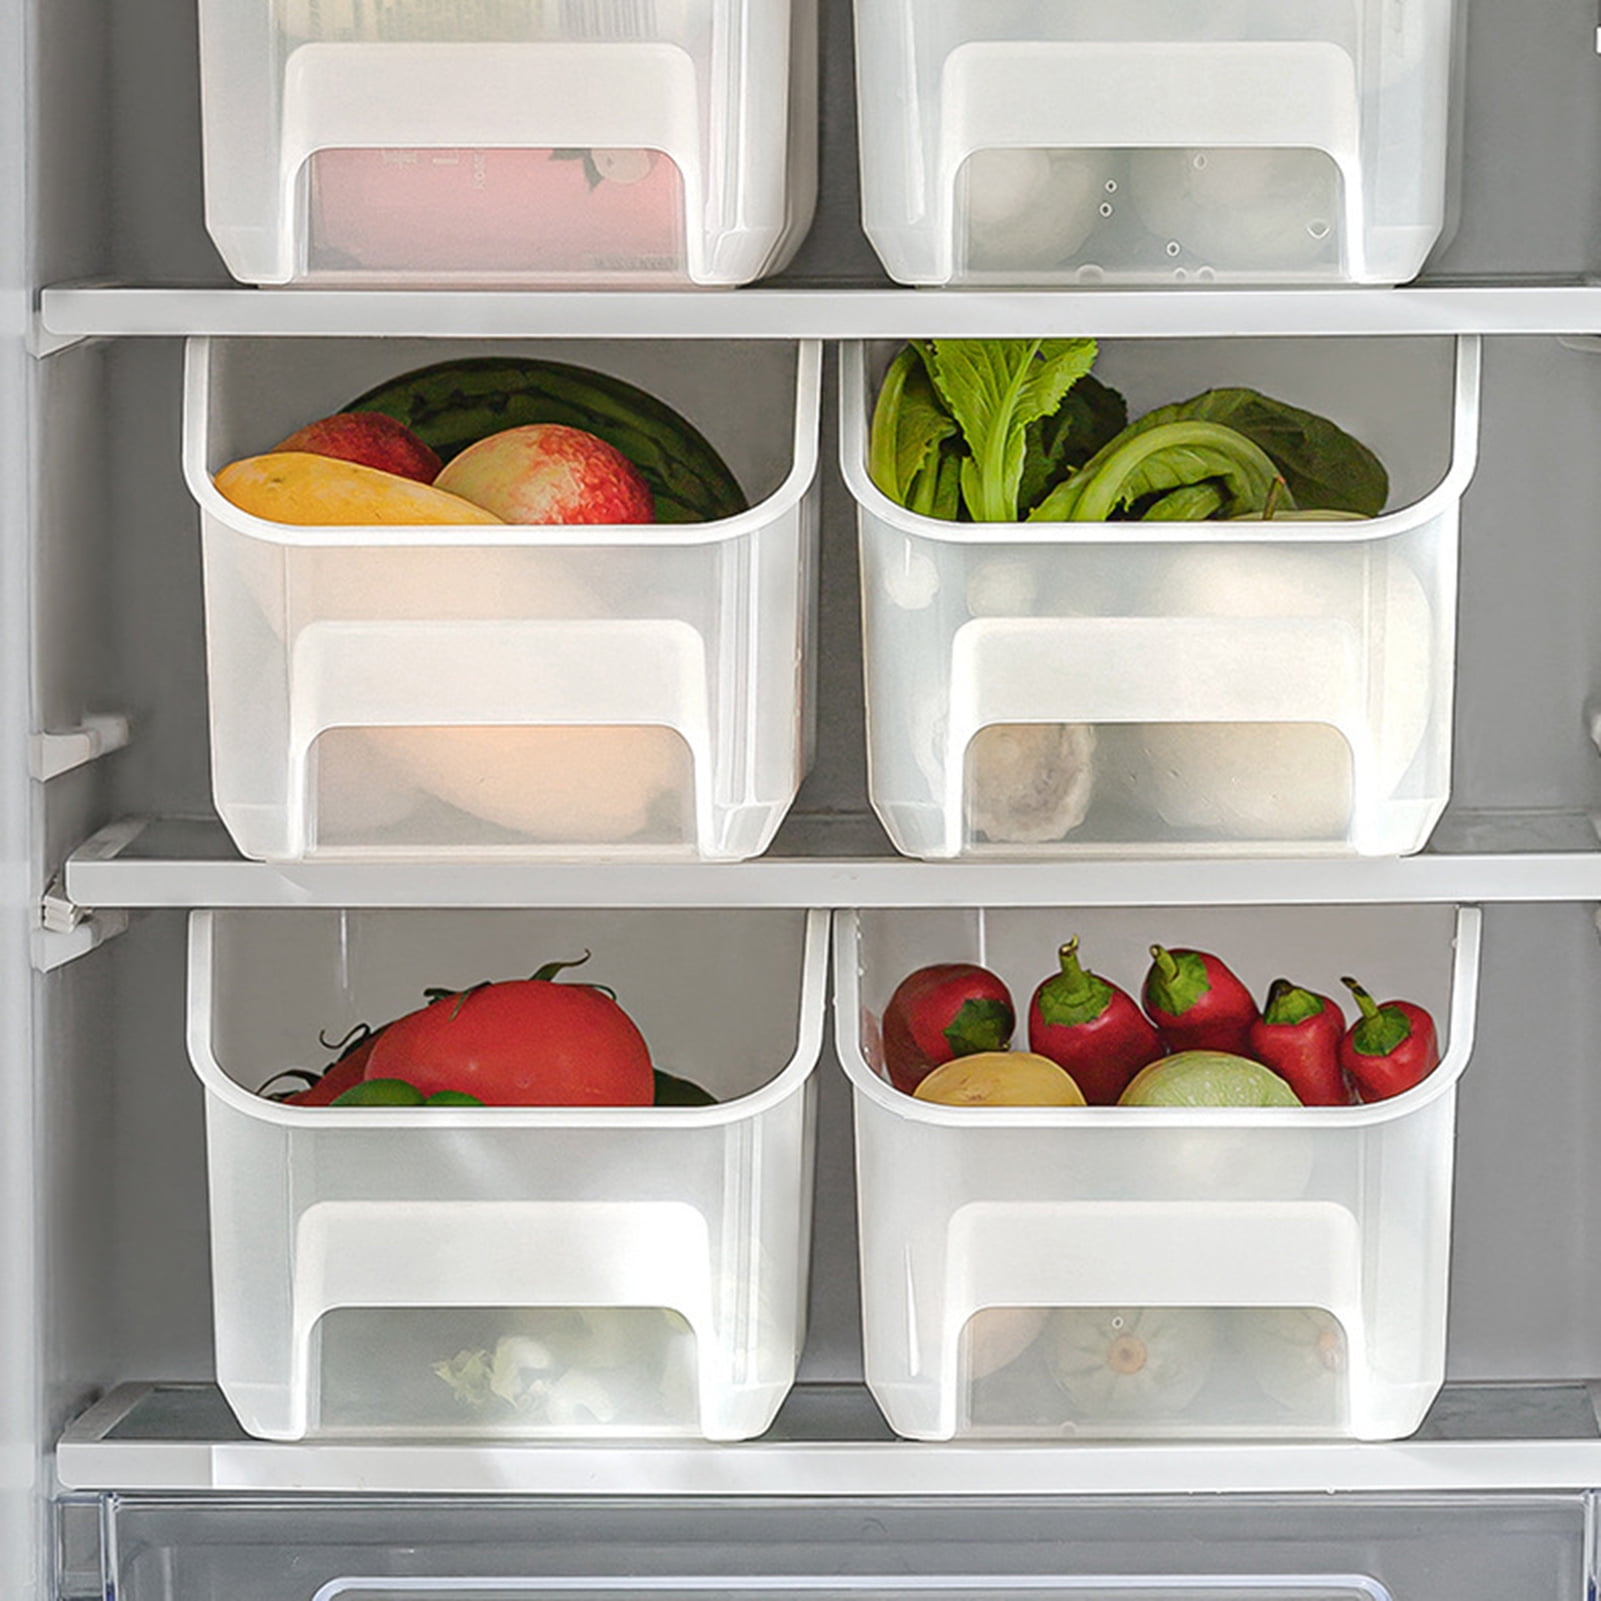 Waroomhouse Refrigerator Storage Box Compartment Design Flexible